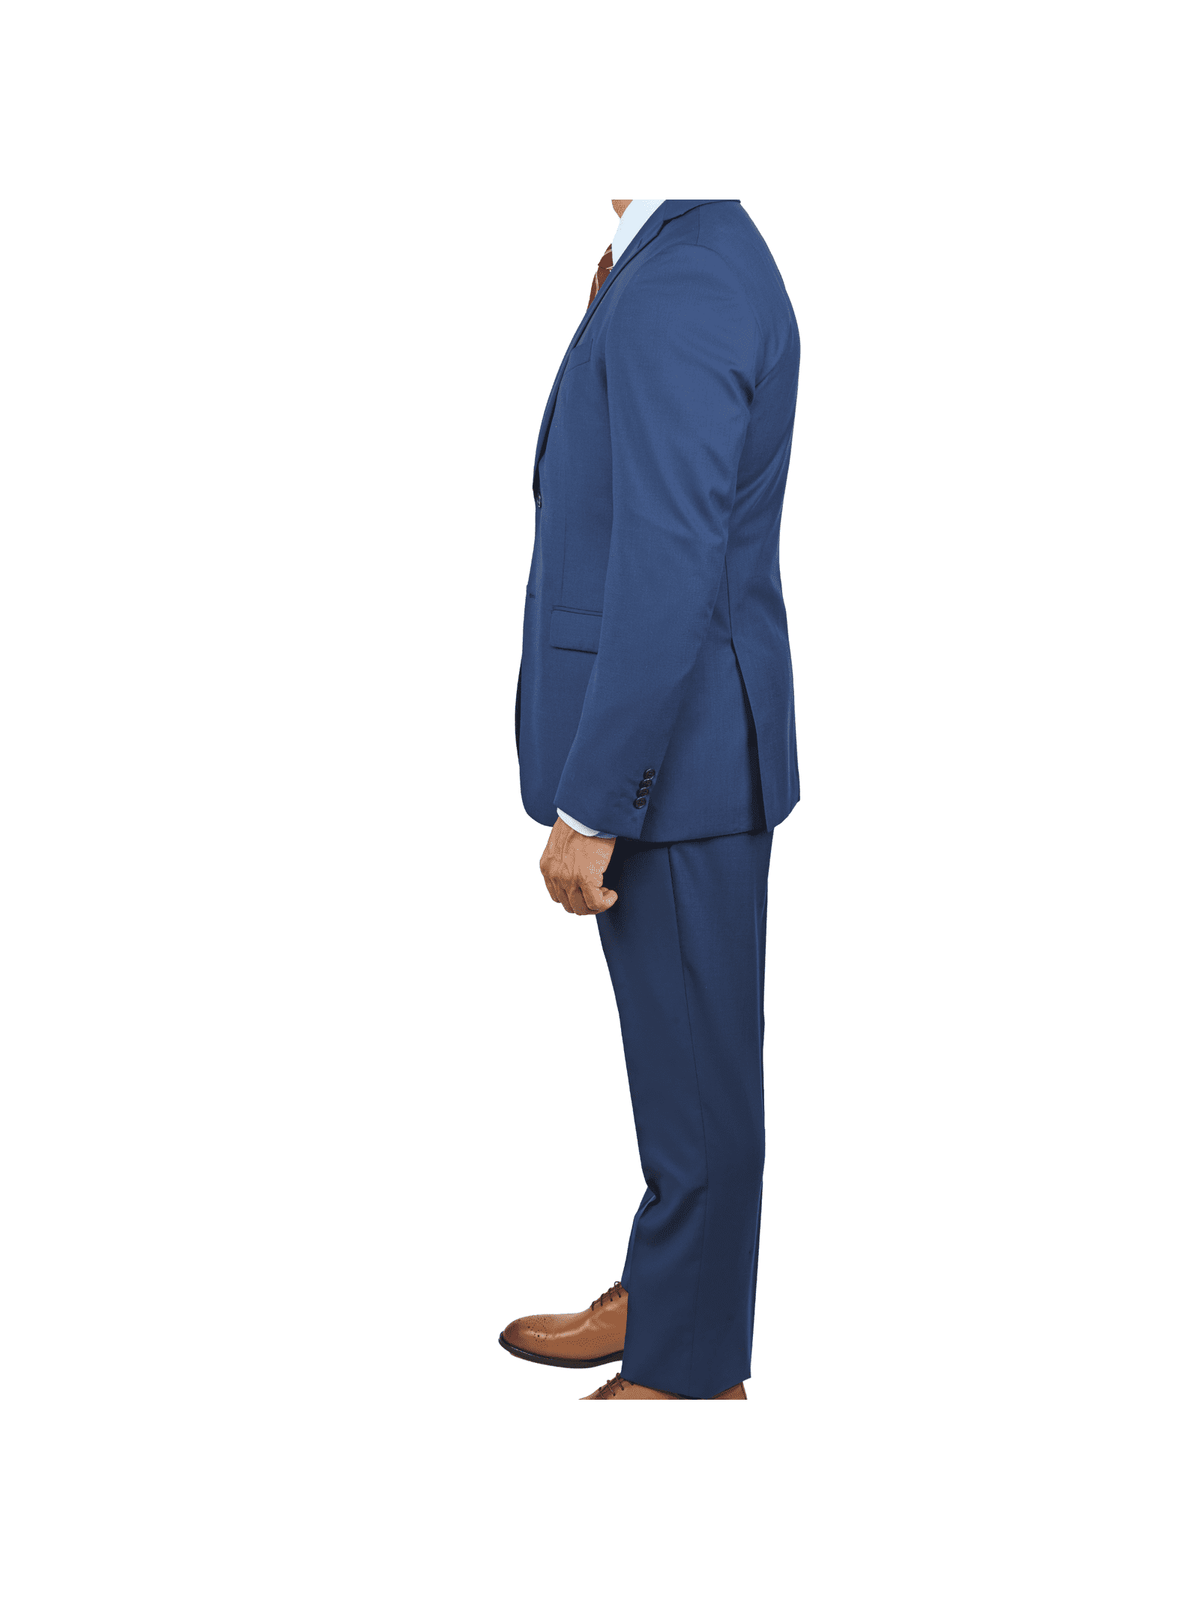 side view of John Varvatos blue slim fit suit